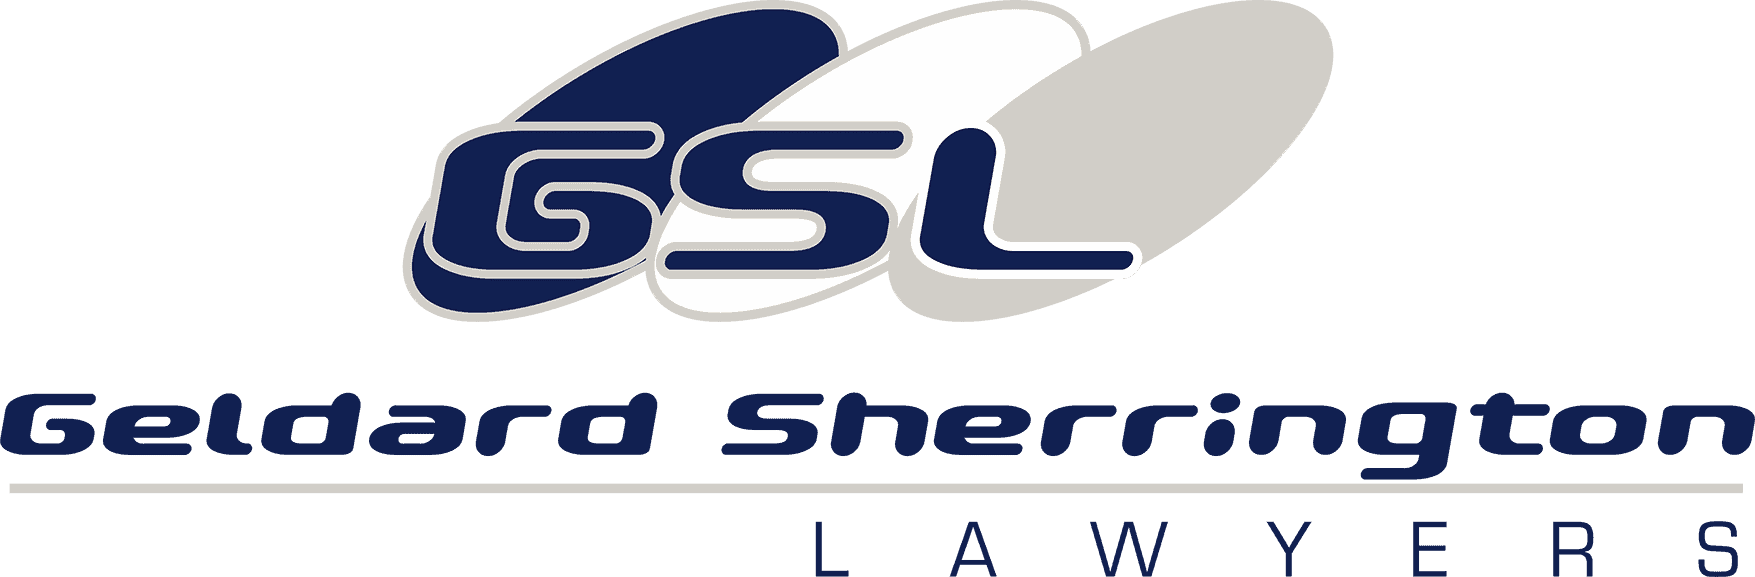 GSL logo resized